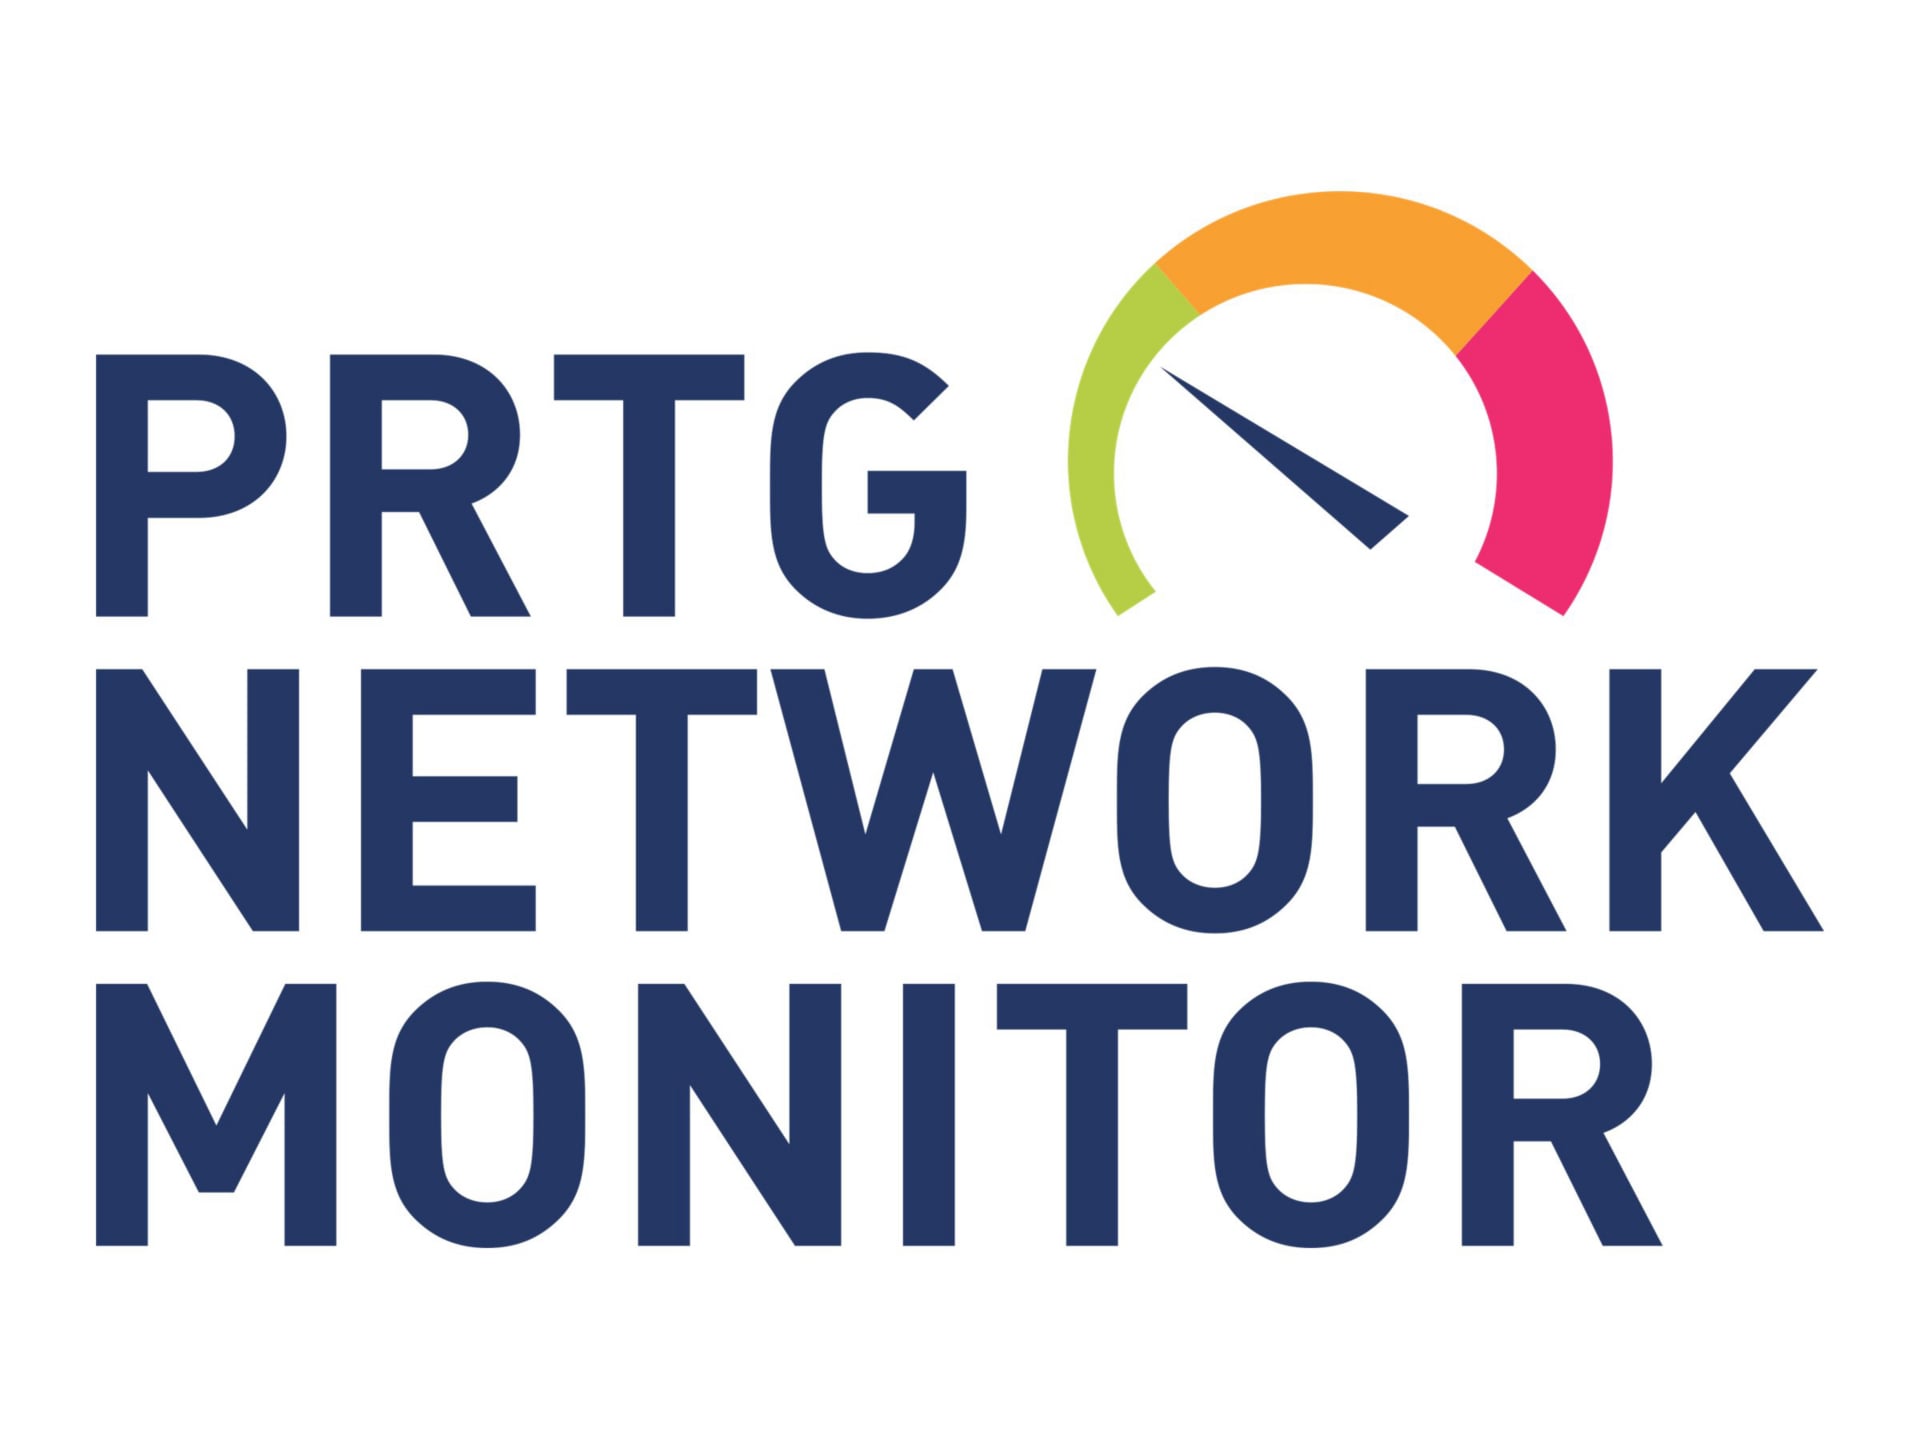 PRTG Network Monitor 2500 - maintenance (5 years) - 2500 sensors, 1 server installation